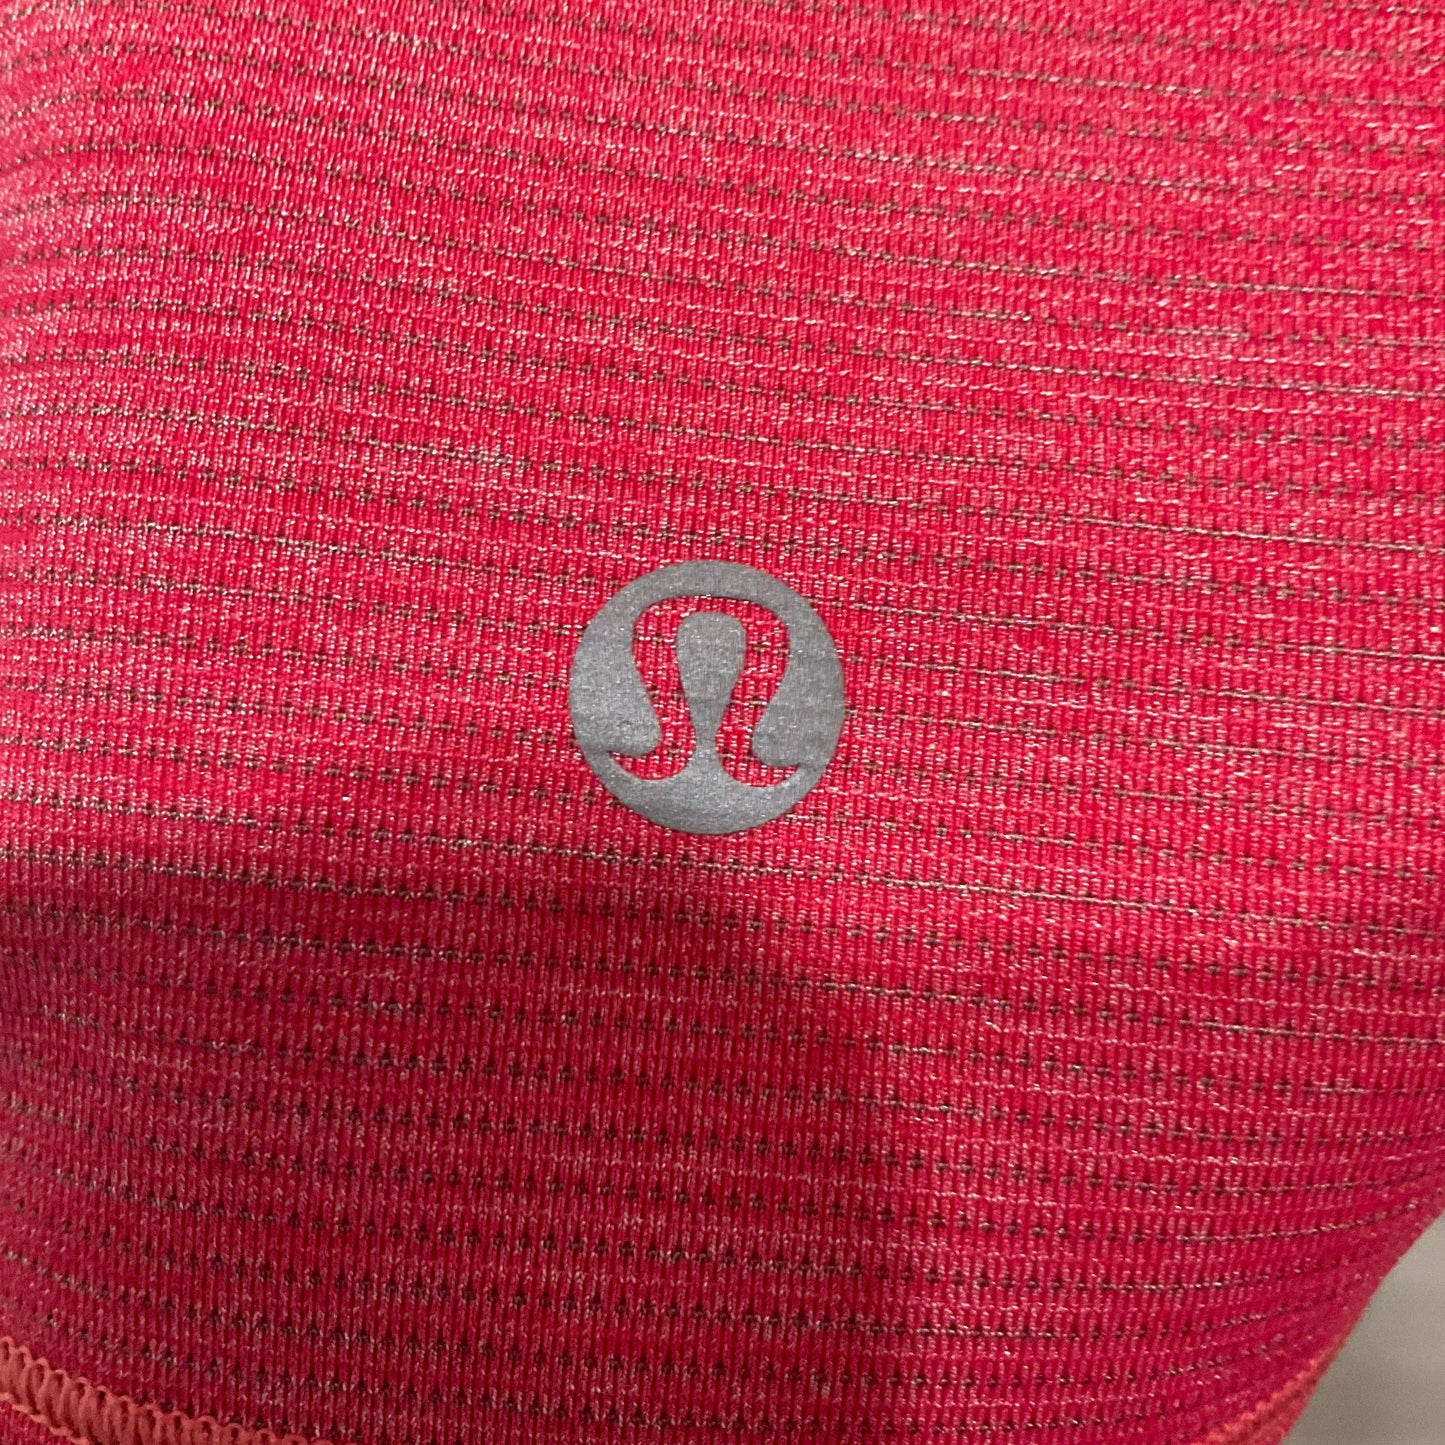 Pink Athletic Top Short Sleeve Lululemon, Size 12